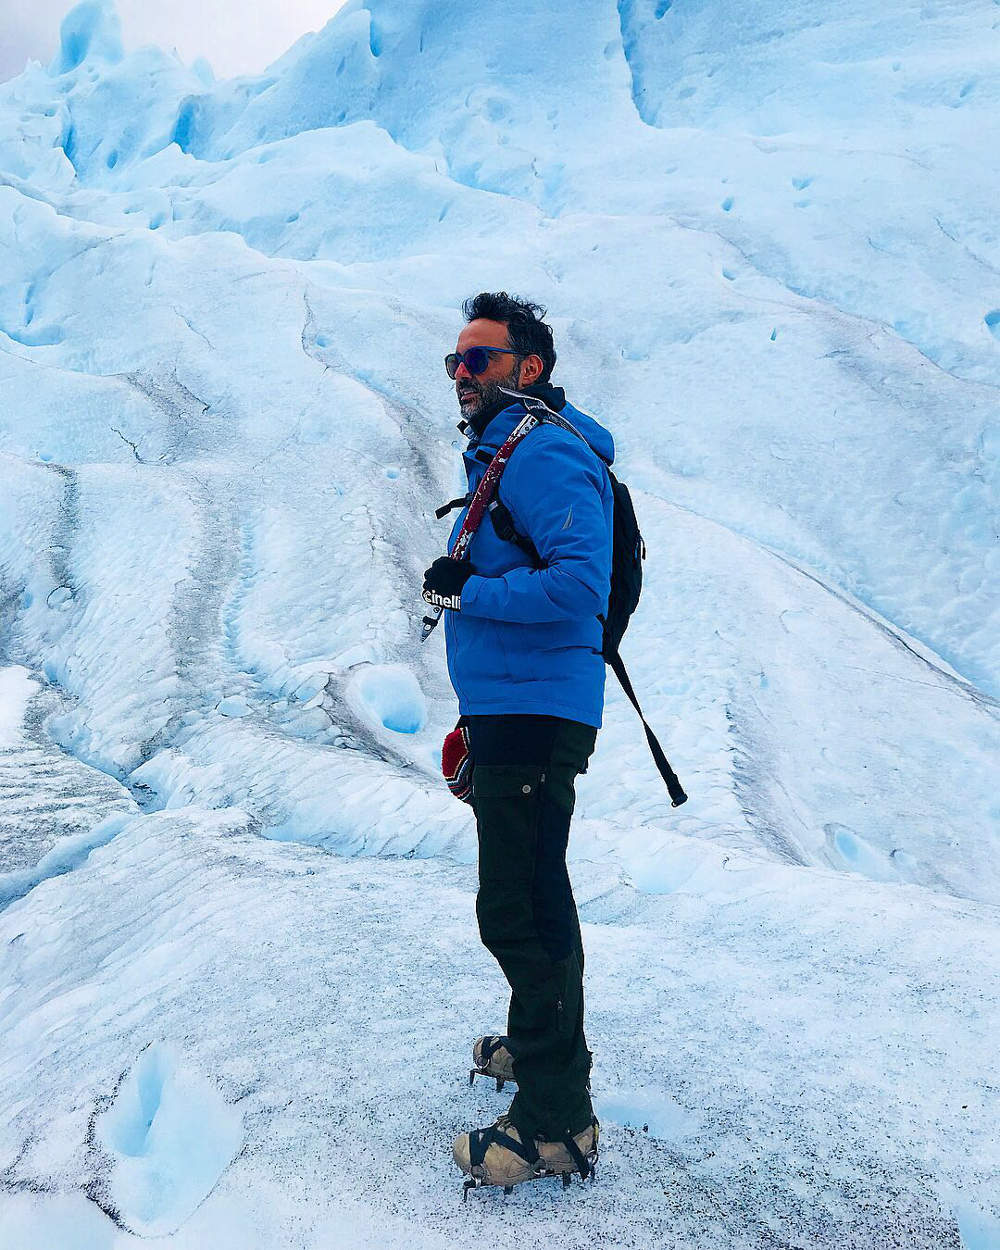 Perito Moreno buzulu